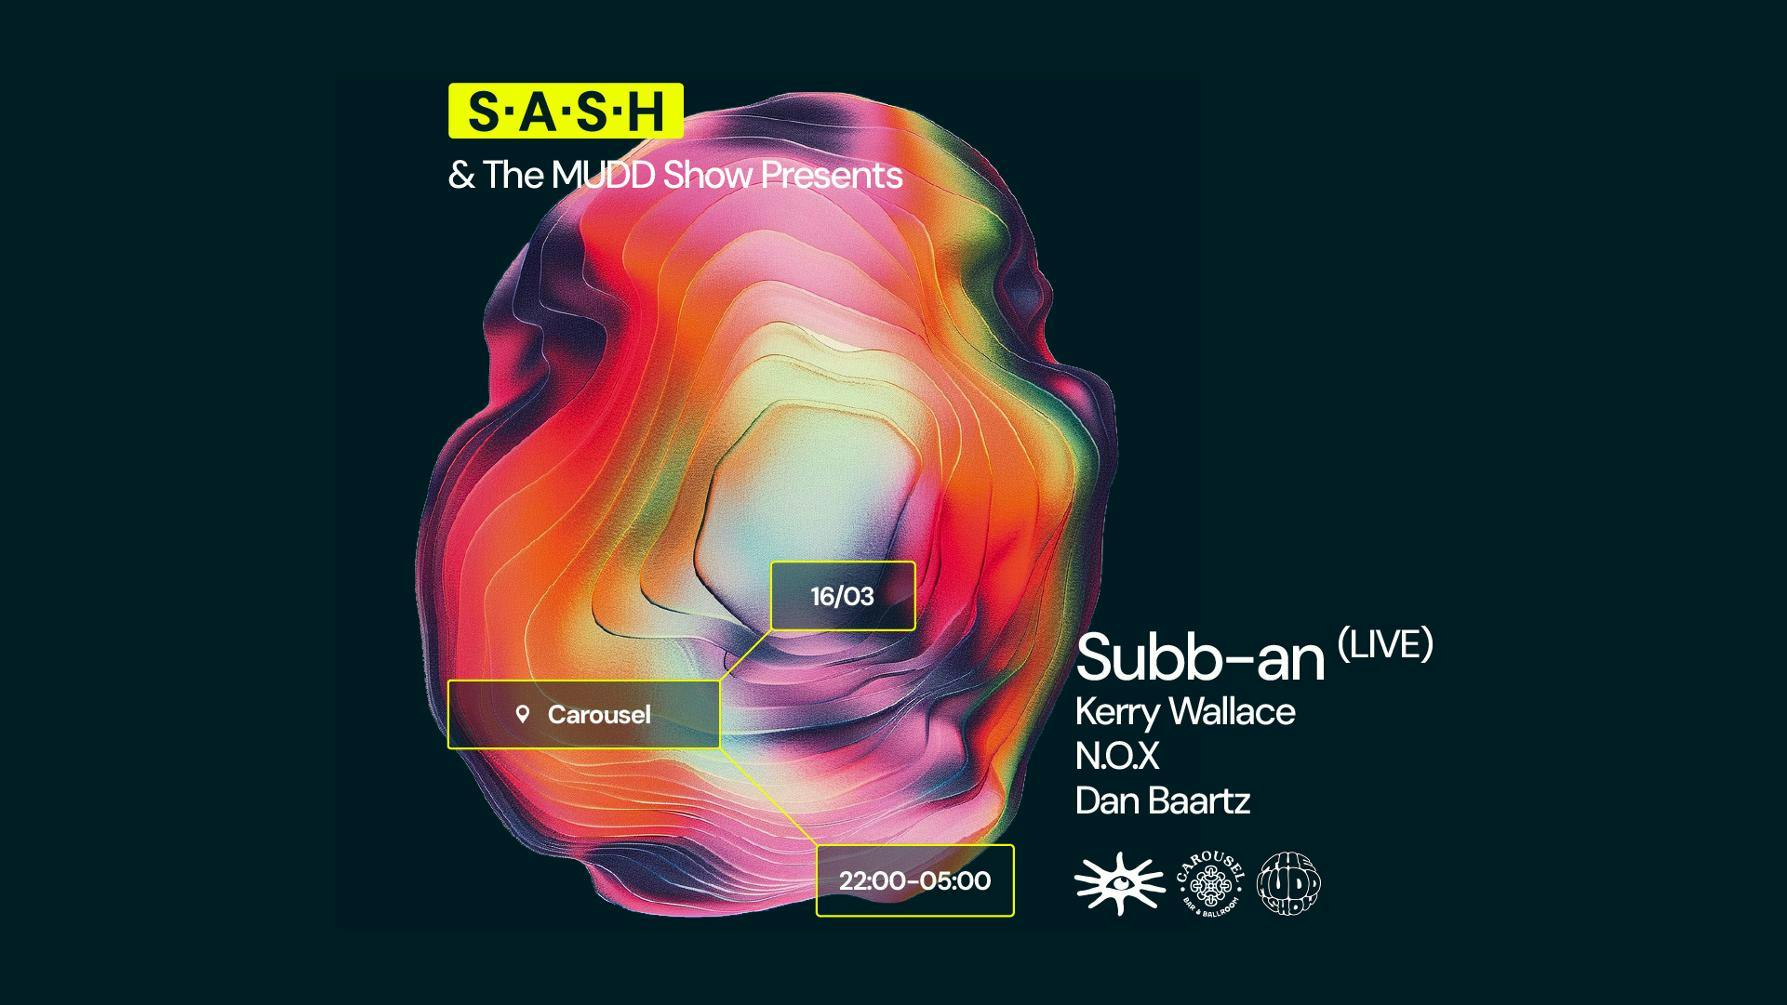 ★ S.A.S.H & The MUDD Show Presents Subb-an (LIVE) ★ Saturday 16th March ★